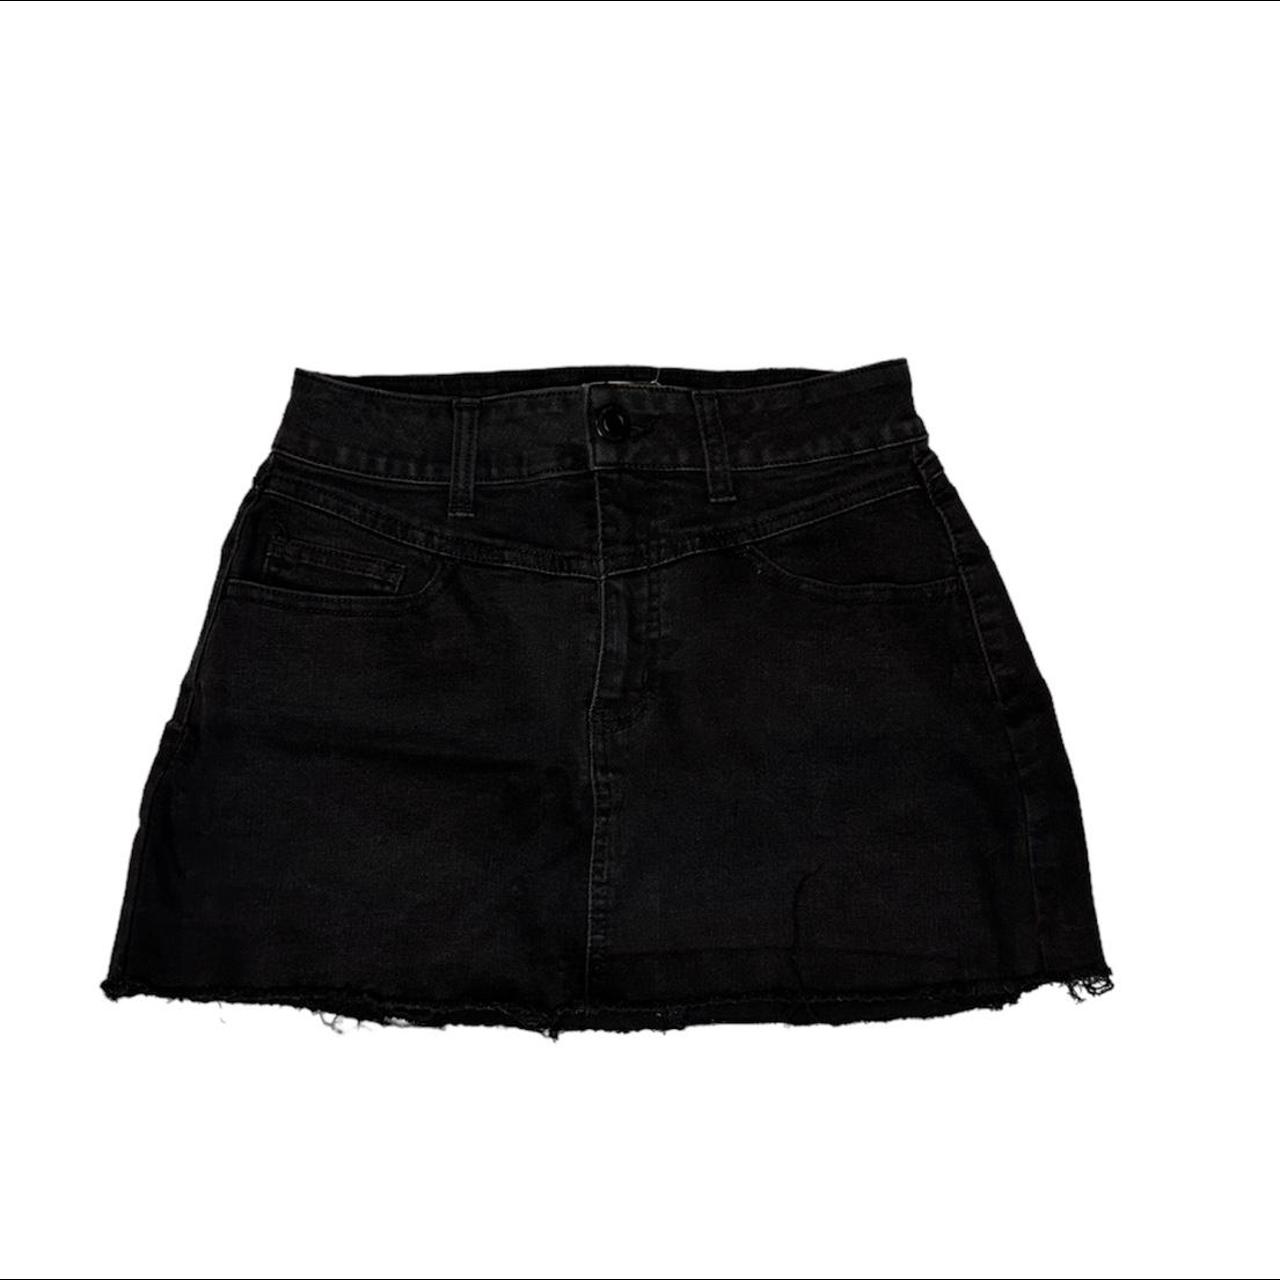 Slightly faded black mini skirt Frayed hem Teetering... - Depop